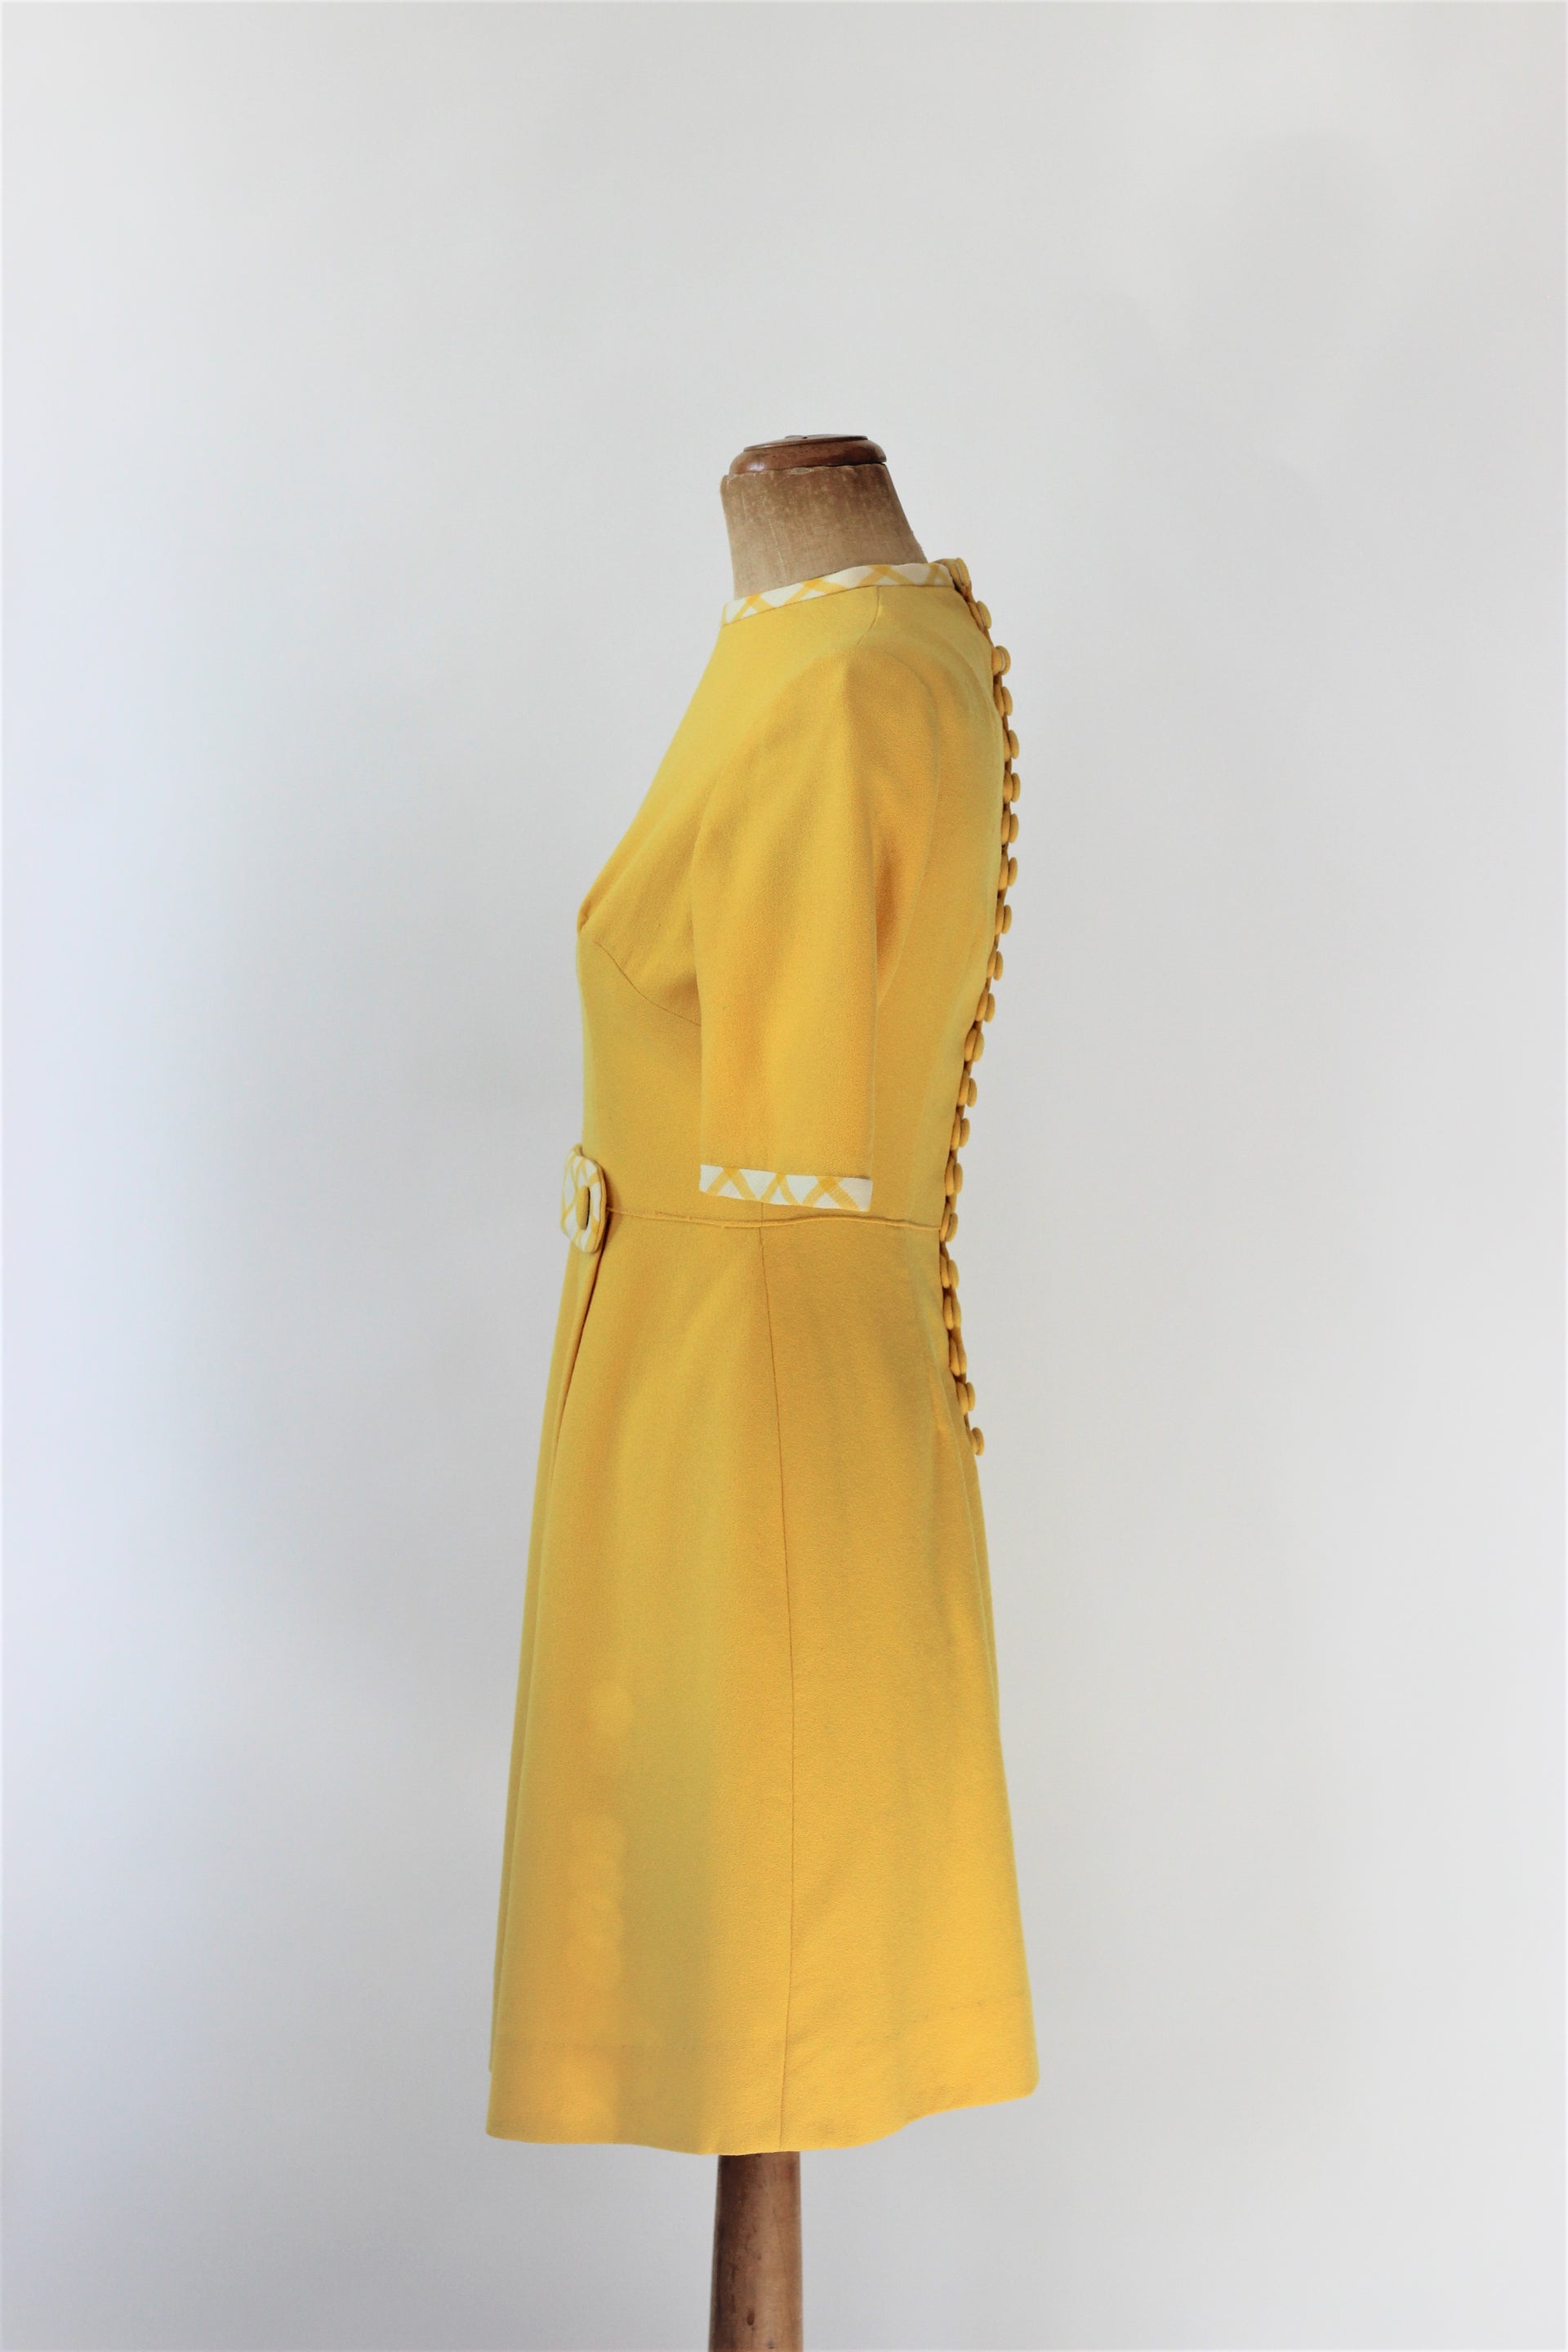 1960s Yellow Short Sleeve Mod Dress//Size M